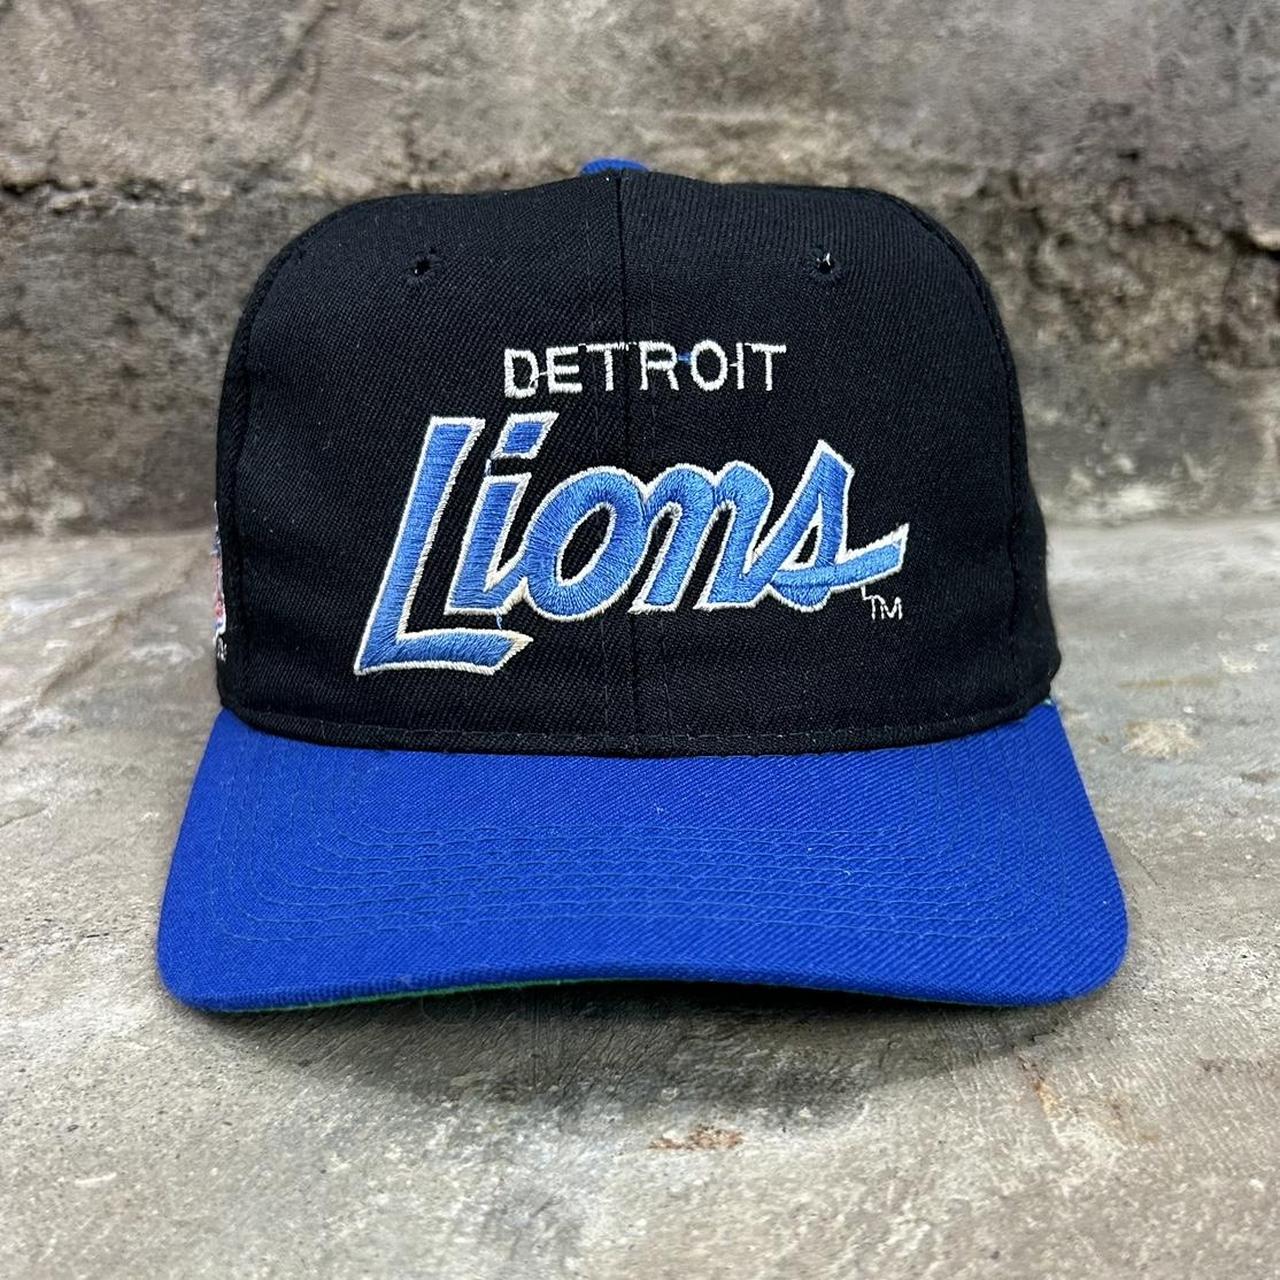 Vintage Detroit Lions Baseball Jersey! Such a - Depop